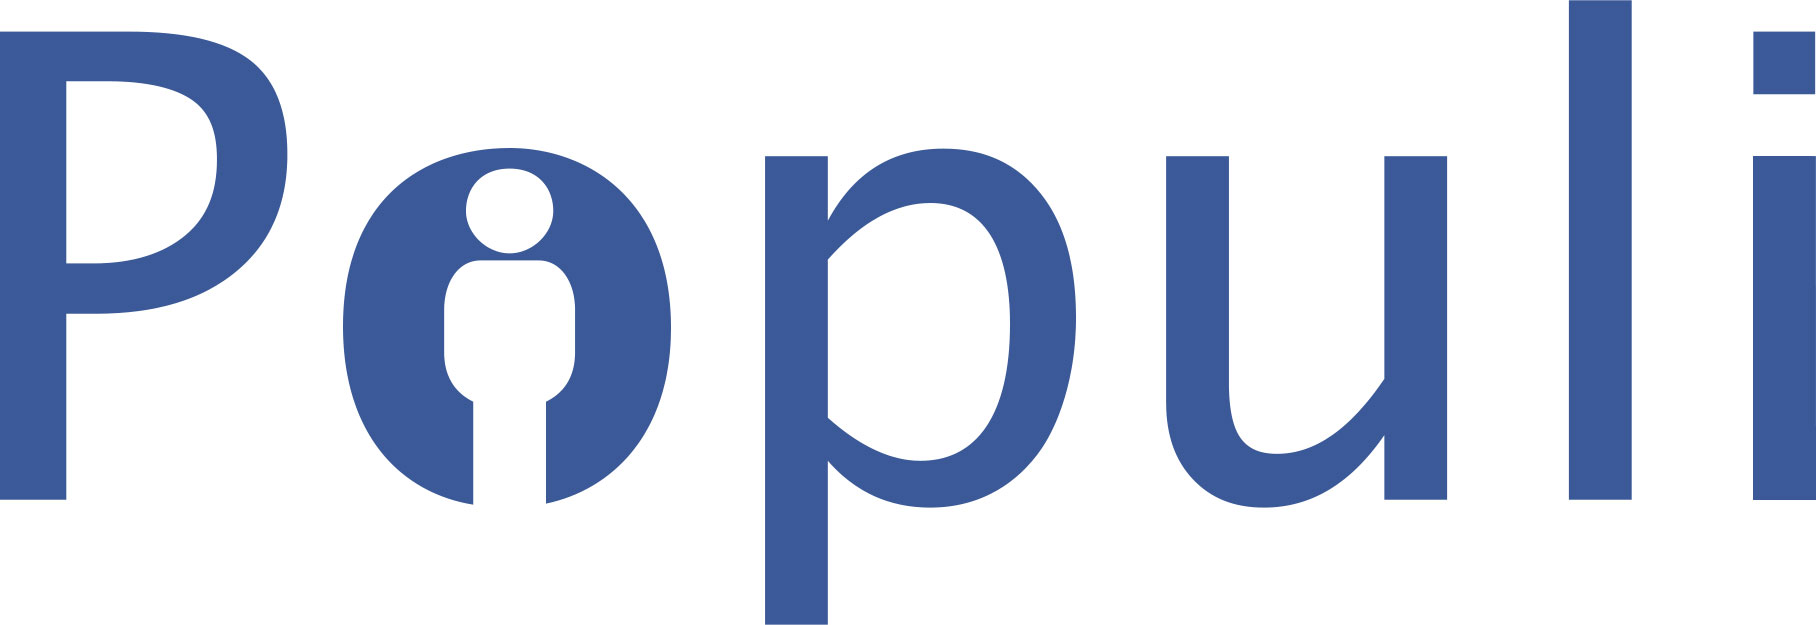 Populi Logo